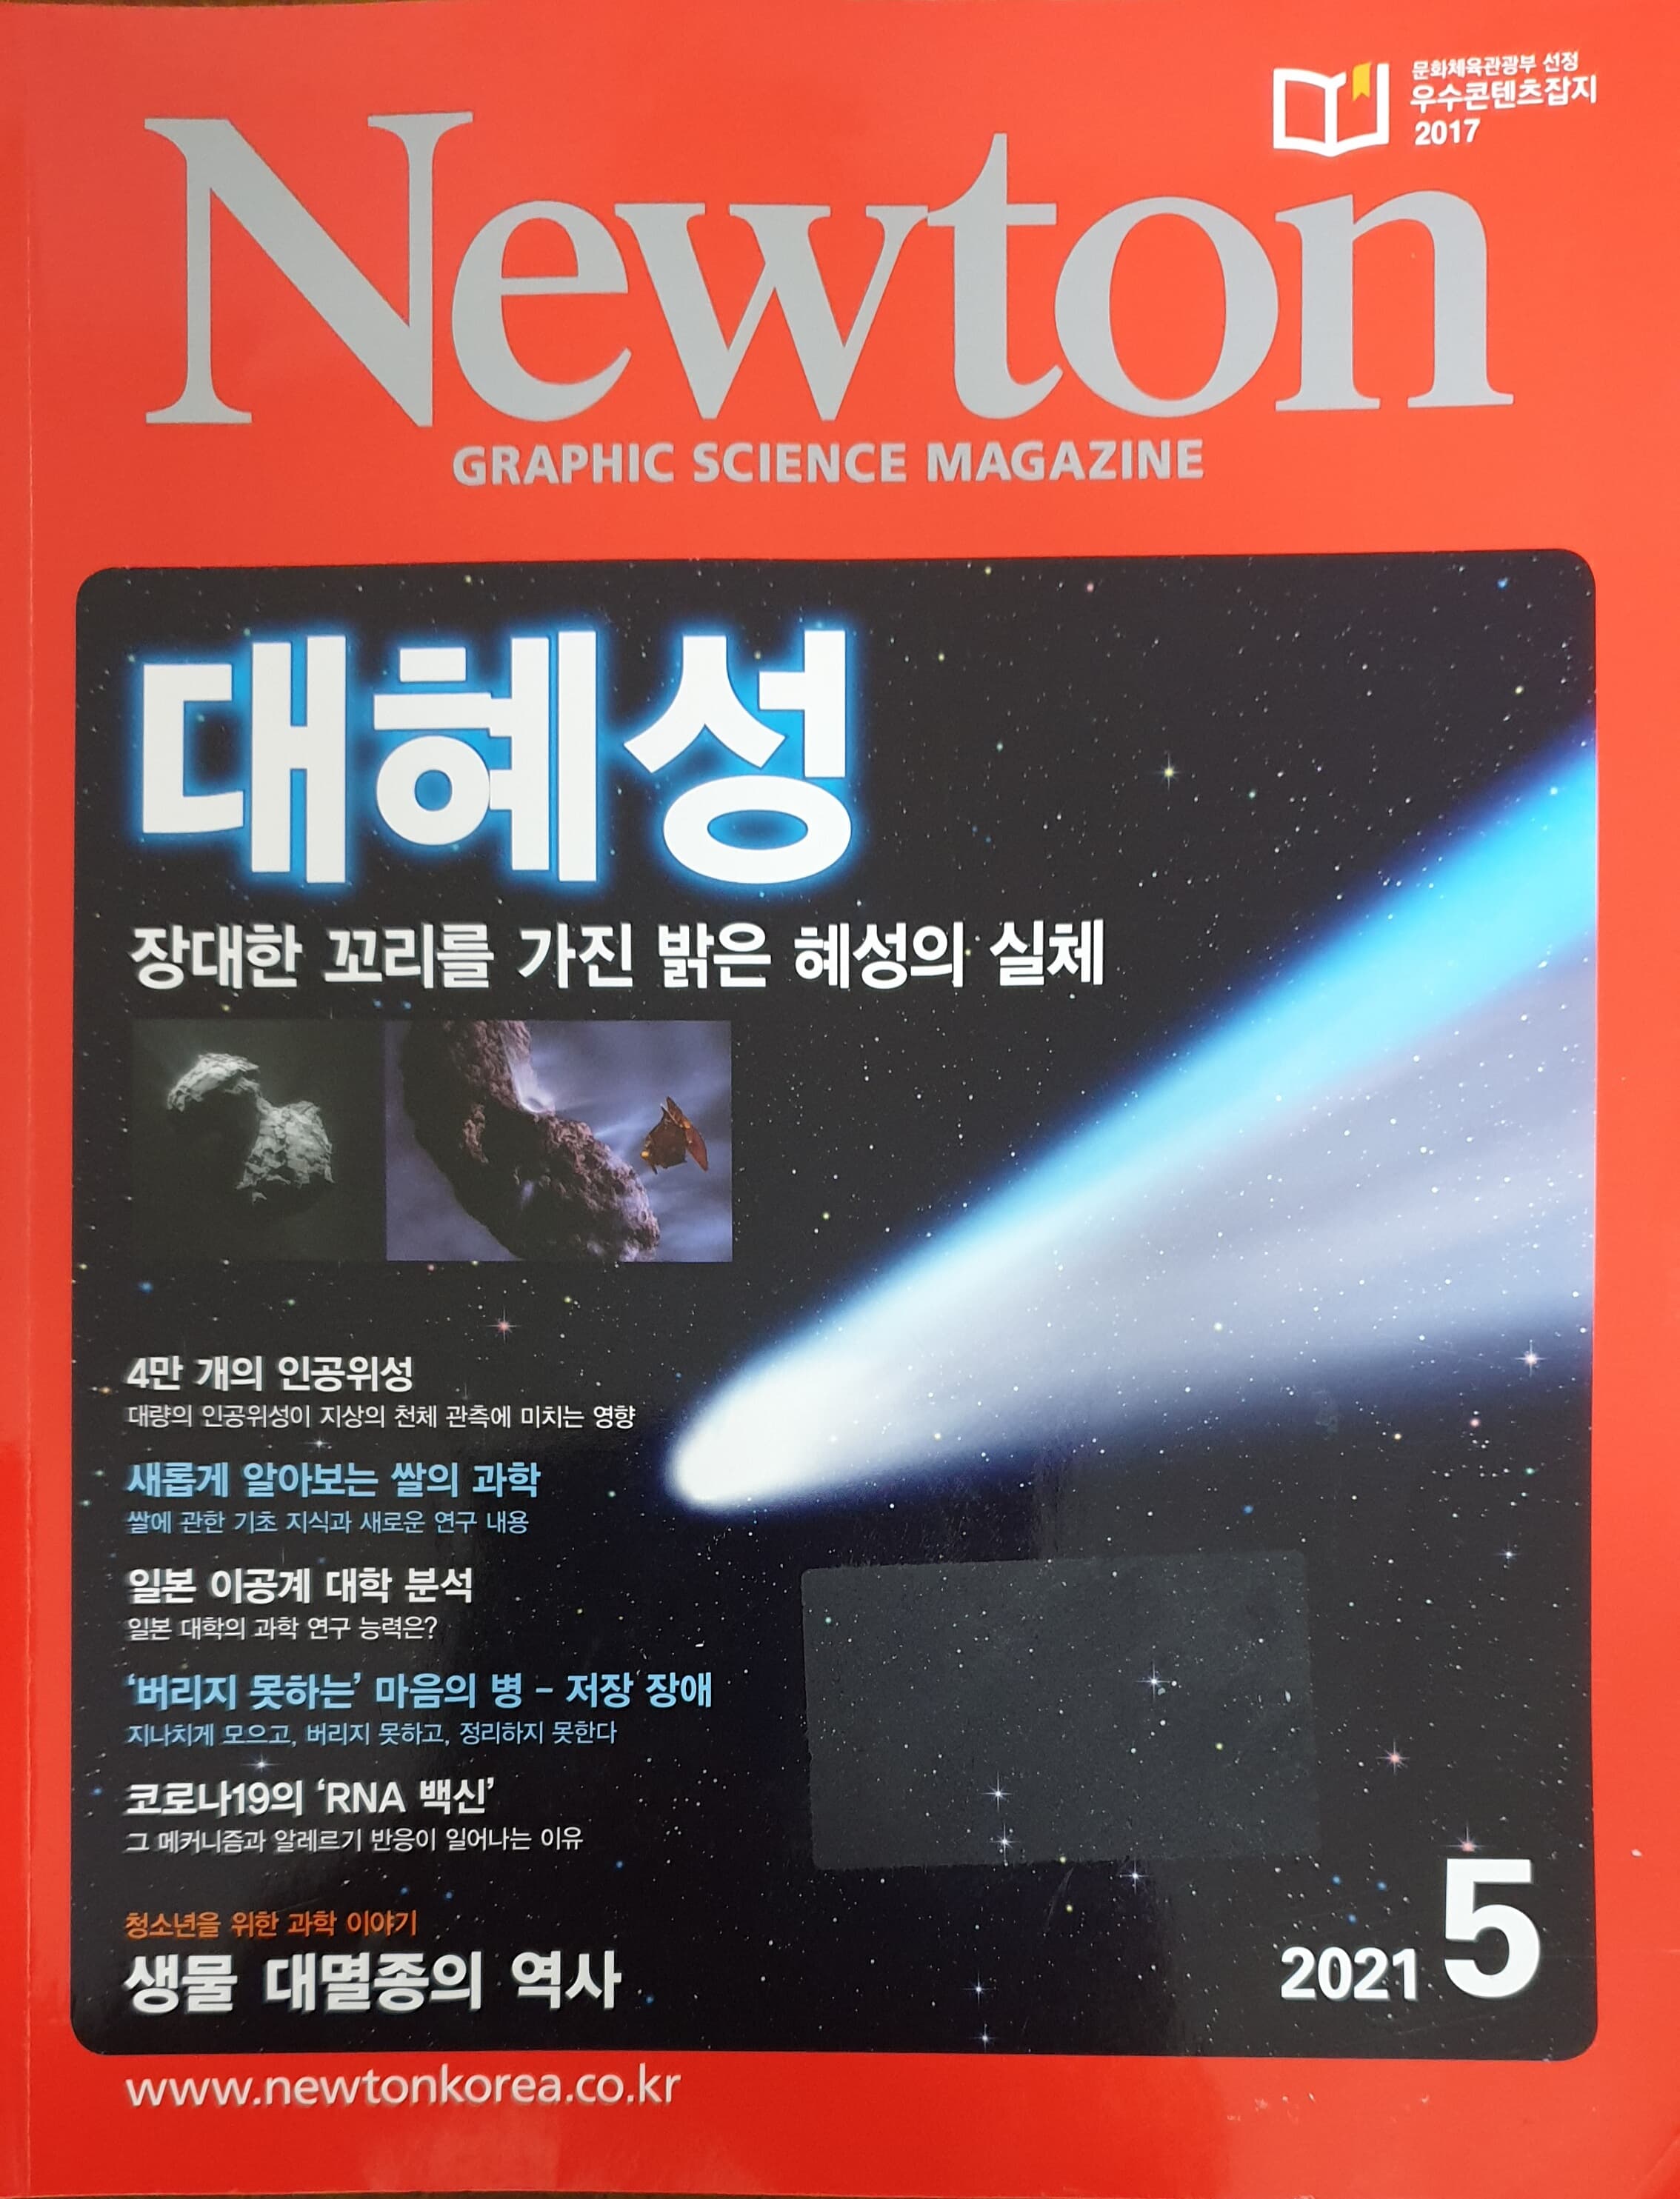 Newton 대혜성 (장대한 꼬리를 가진 밝은 혜성의 실체)  2021년 5월